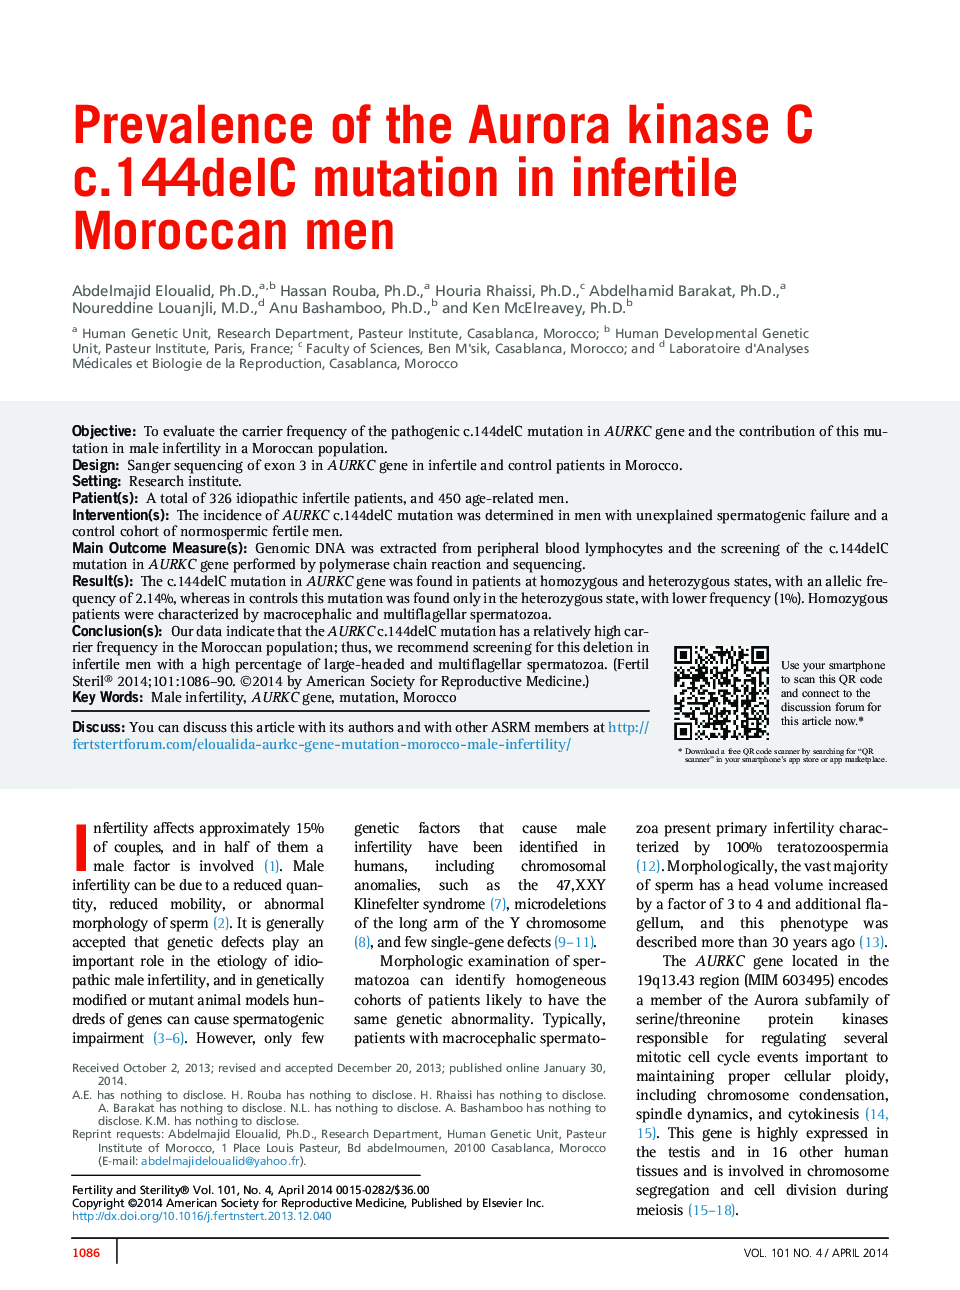 Prevalence of the Aurora kinase C c.144delC mutation in infertile Moroccan men 